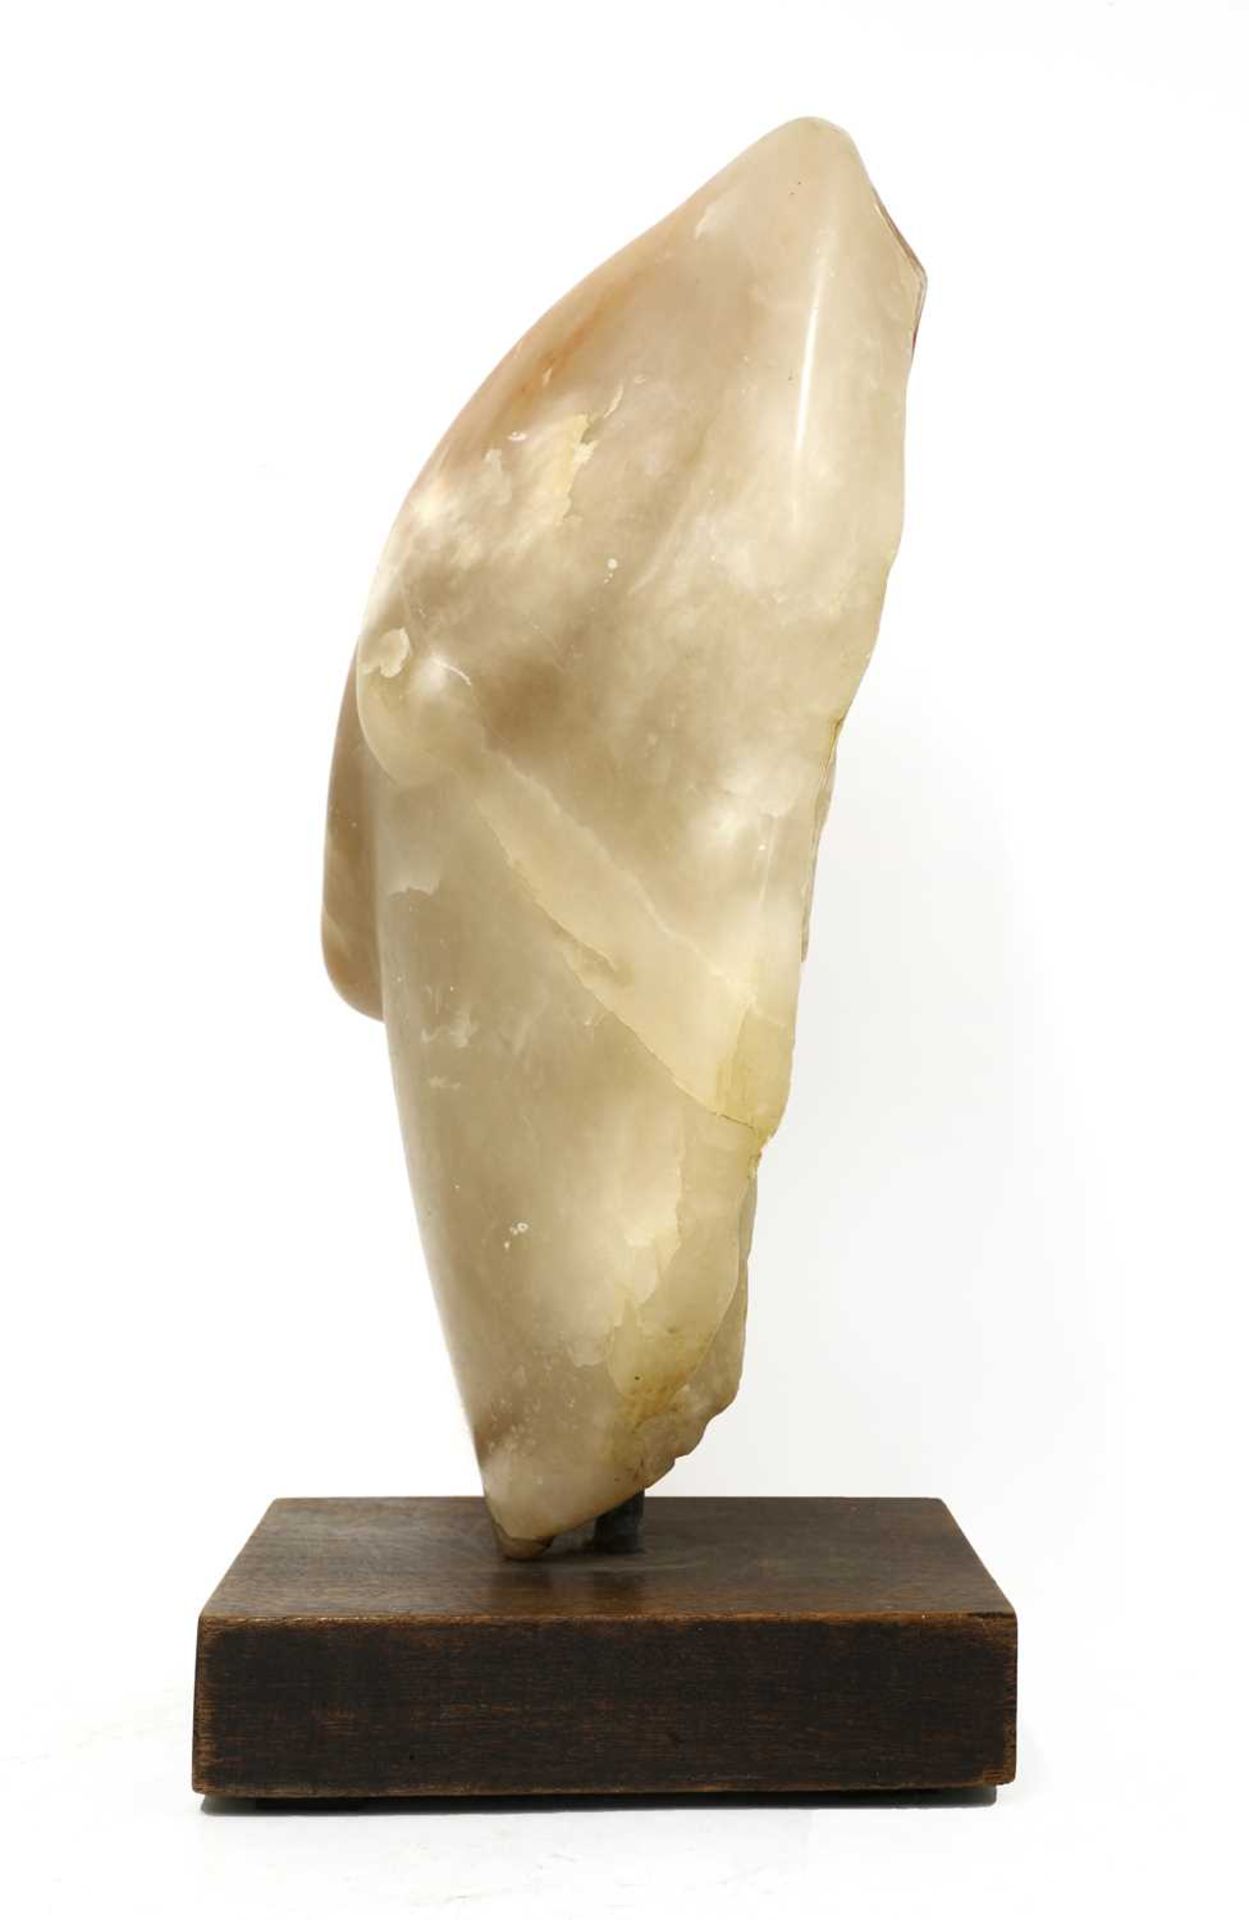 A rose quartz sculpture, - Image 3 of 3